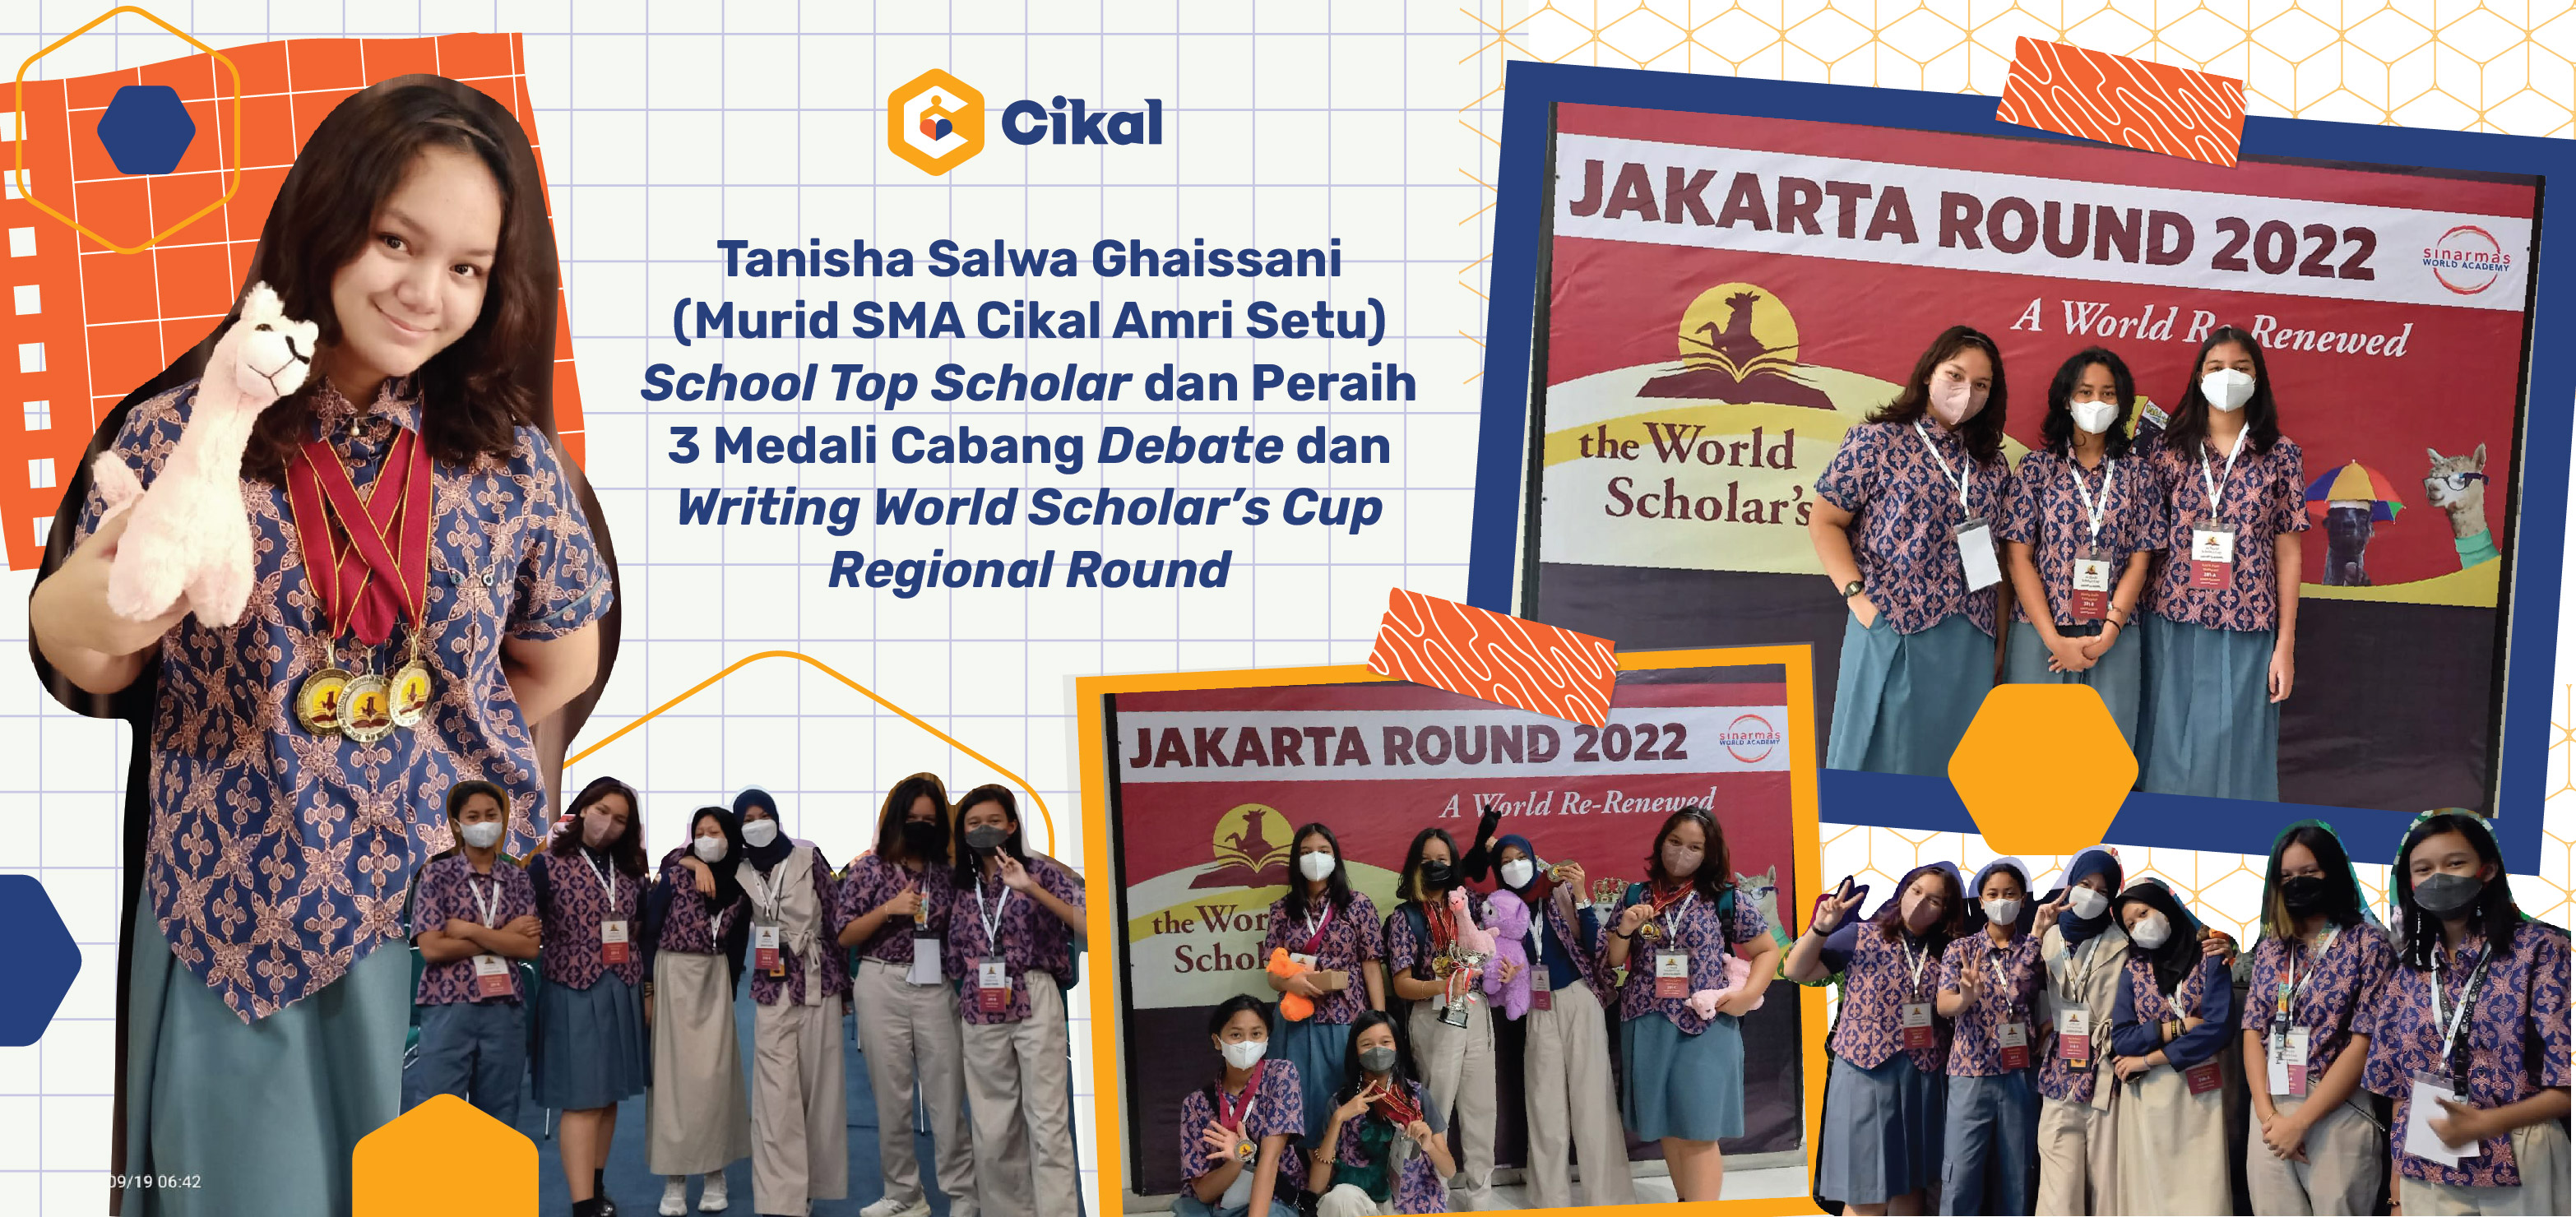  Raih 3 Medali di World Scholars Cup Regional Round Pertamanya, Tanisha Salwa, Murid SMA Cikal Amri Setu, Ingin Banggakan Kedua Orangtuanya! 